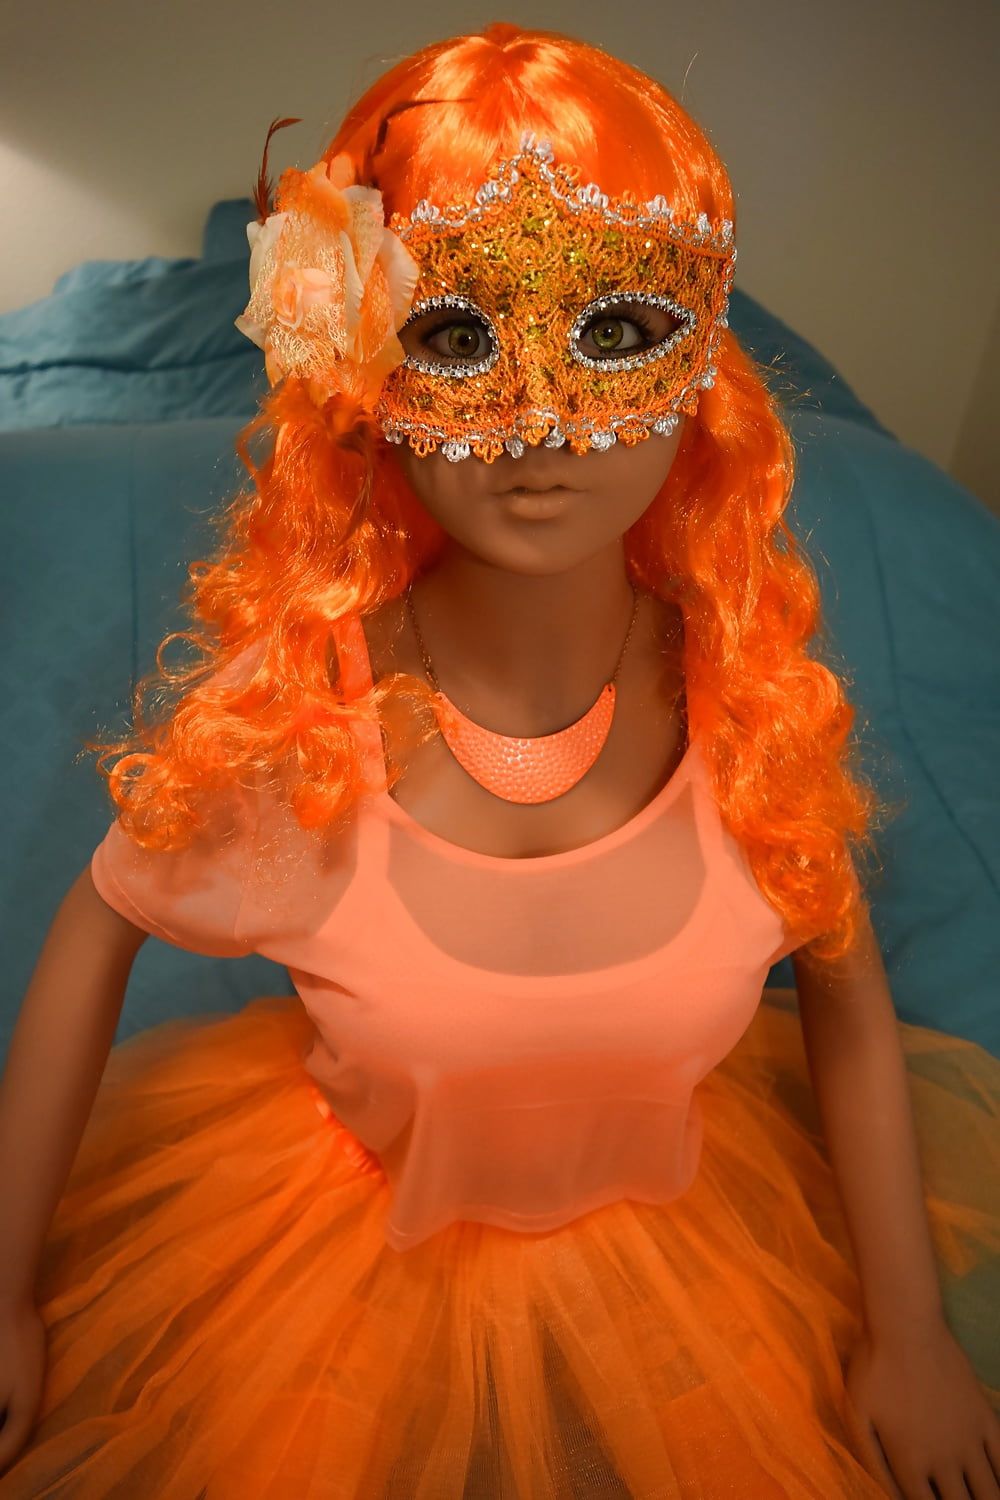 Nina's orange dream #6